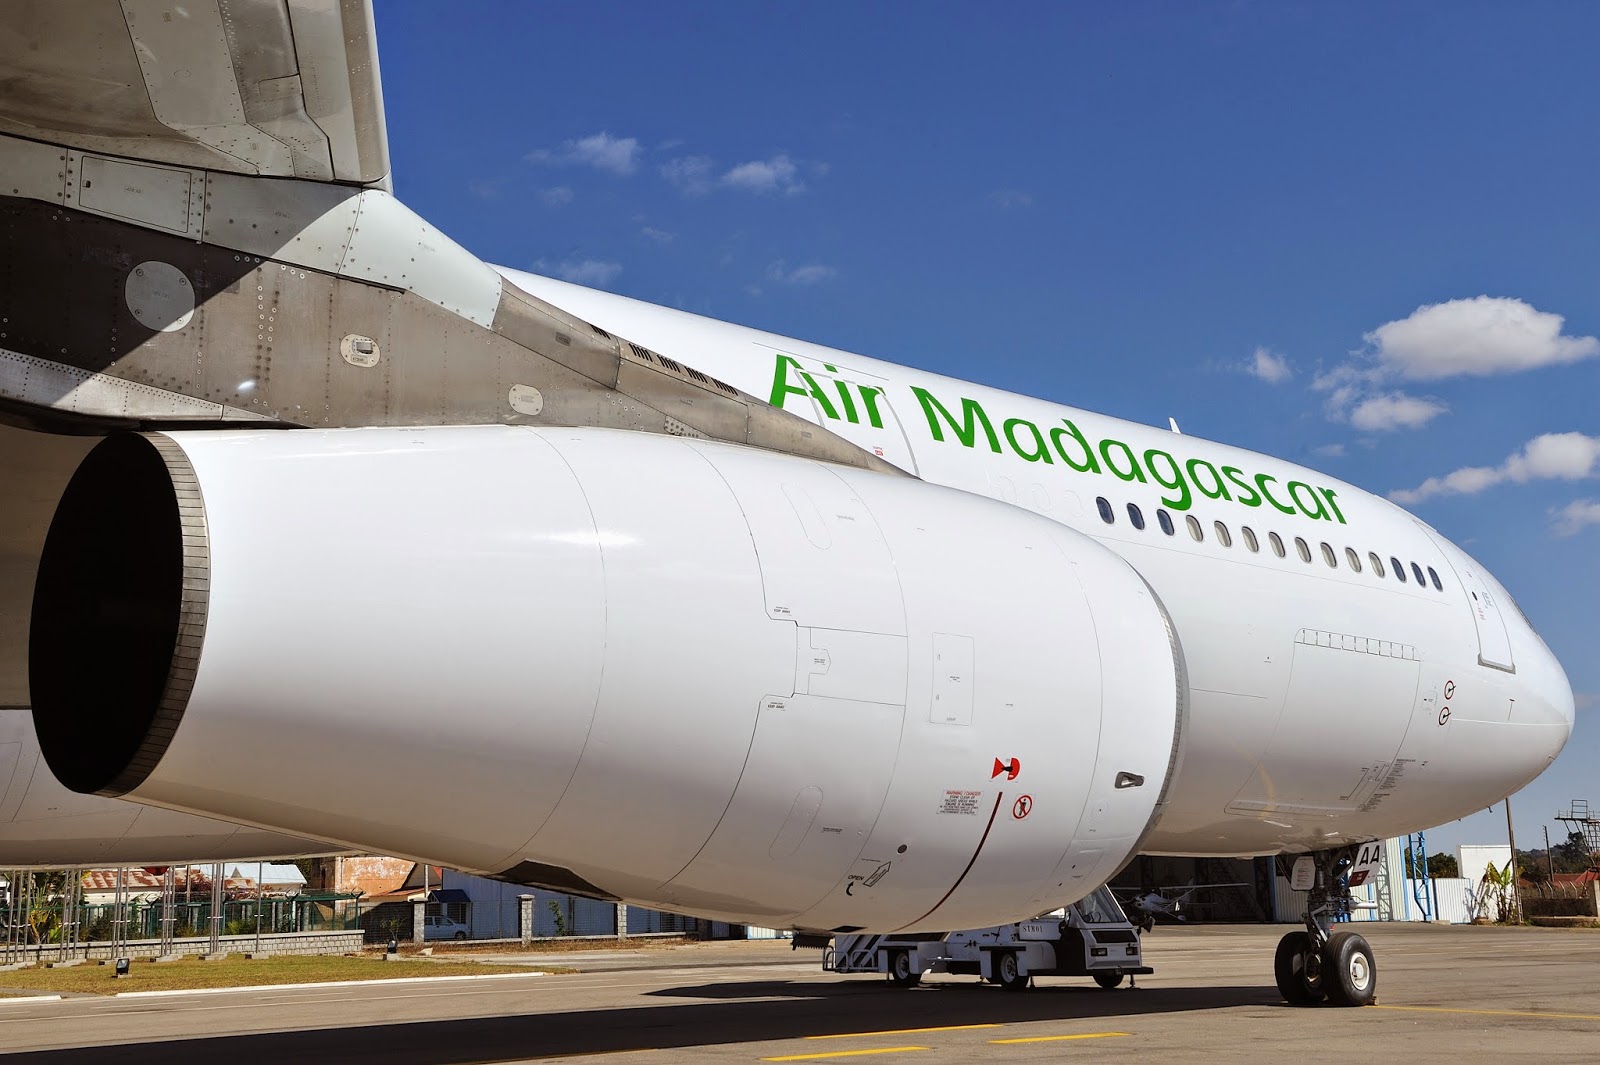 Suspension des vols Air Madagascar entre CDG et Madagascar